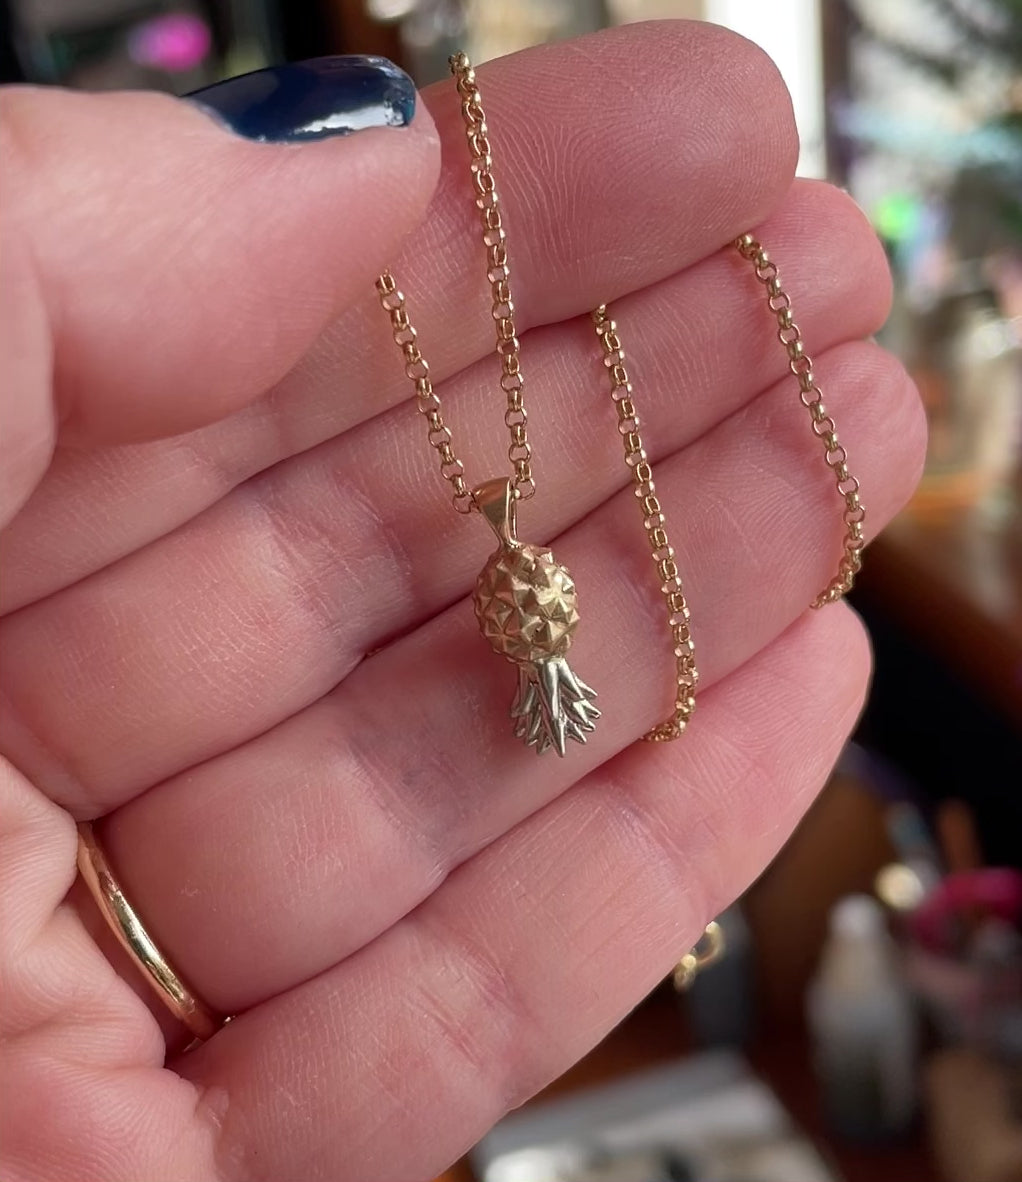 pineapple necklace - petite pineapple pendant, upside down pineapple